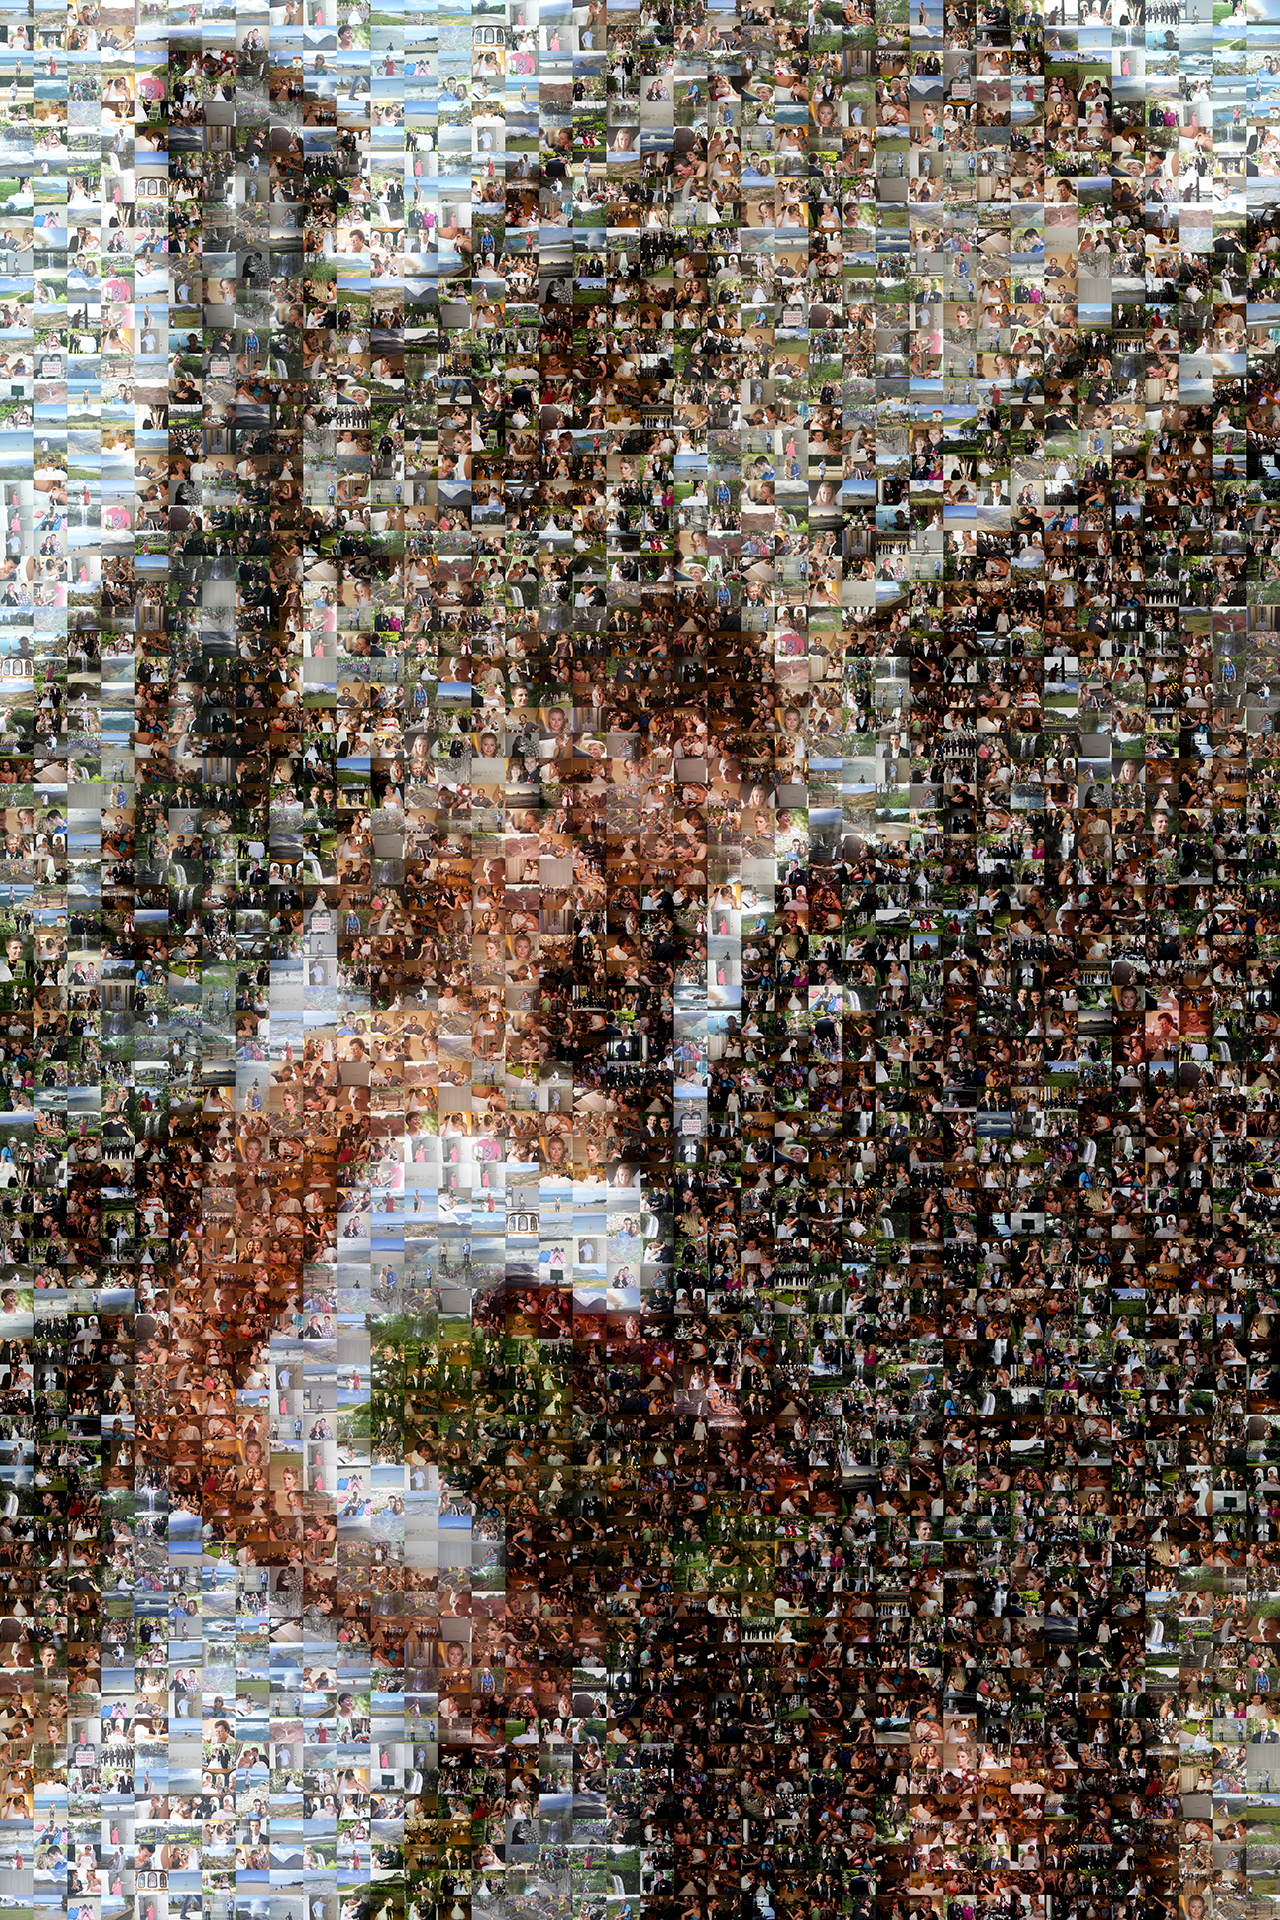 photo mosaic created using 496 photos of the happy couple